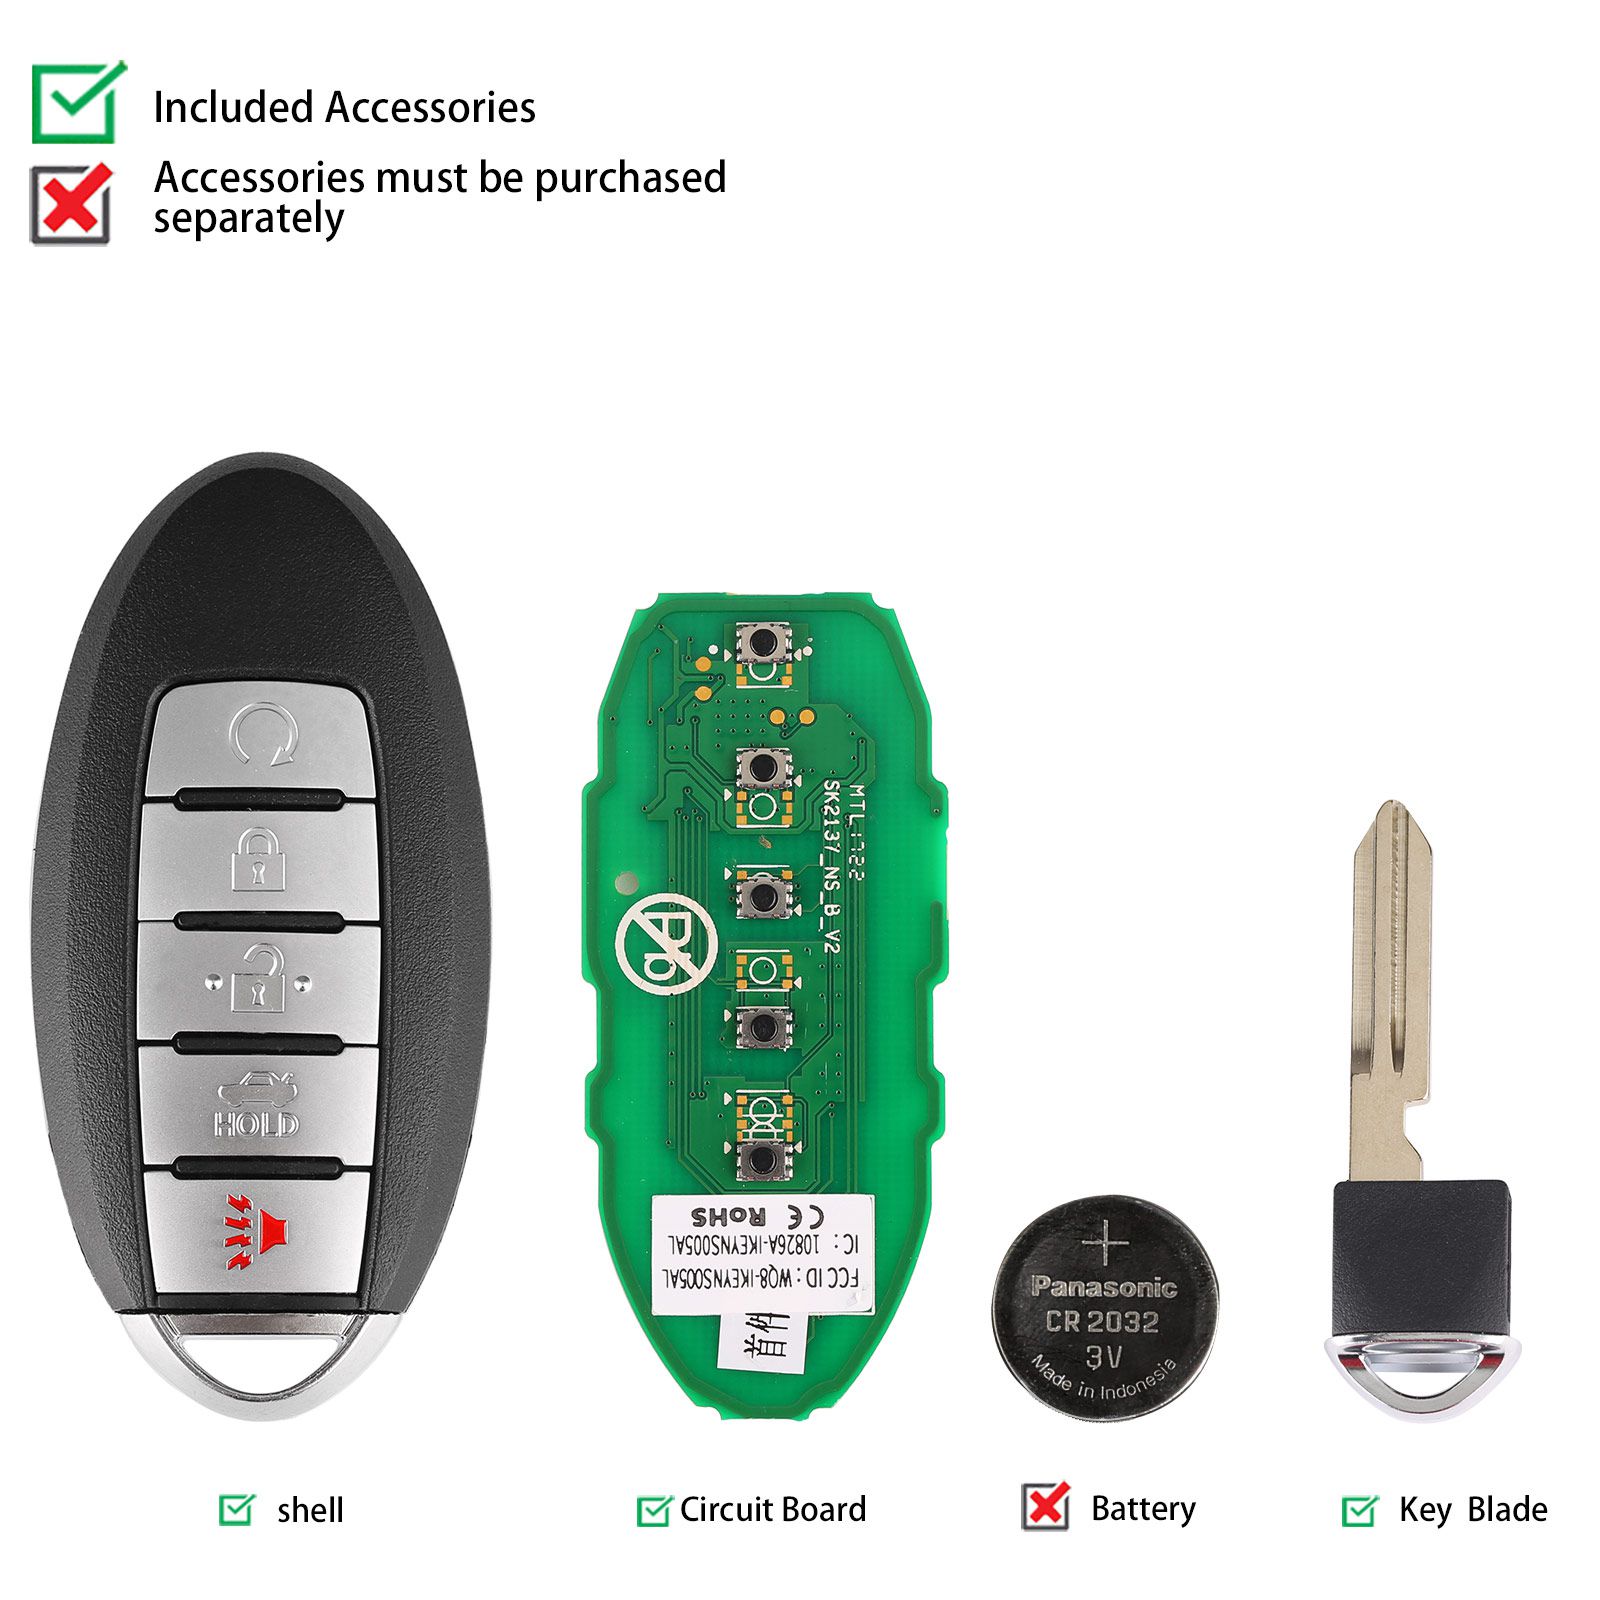 AUTEL IKEYNS005AL Nissan 5 Buttons Universal Smart Key 5pcs/lot